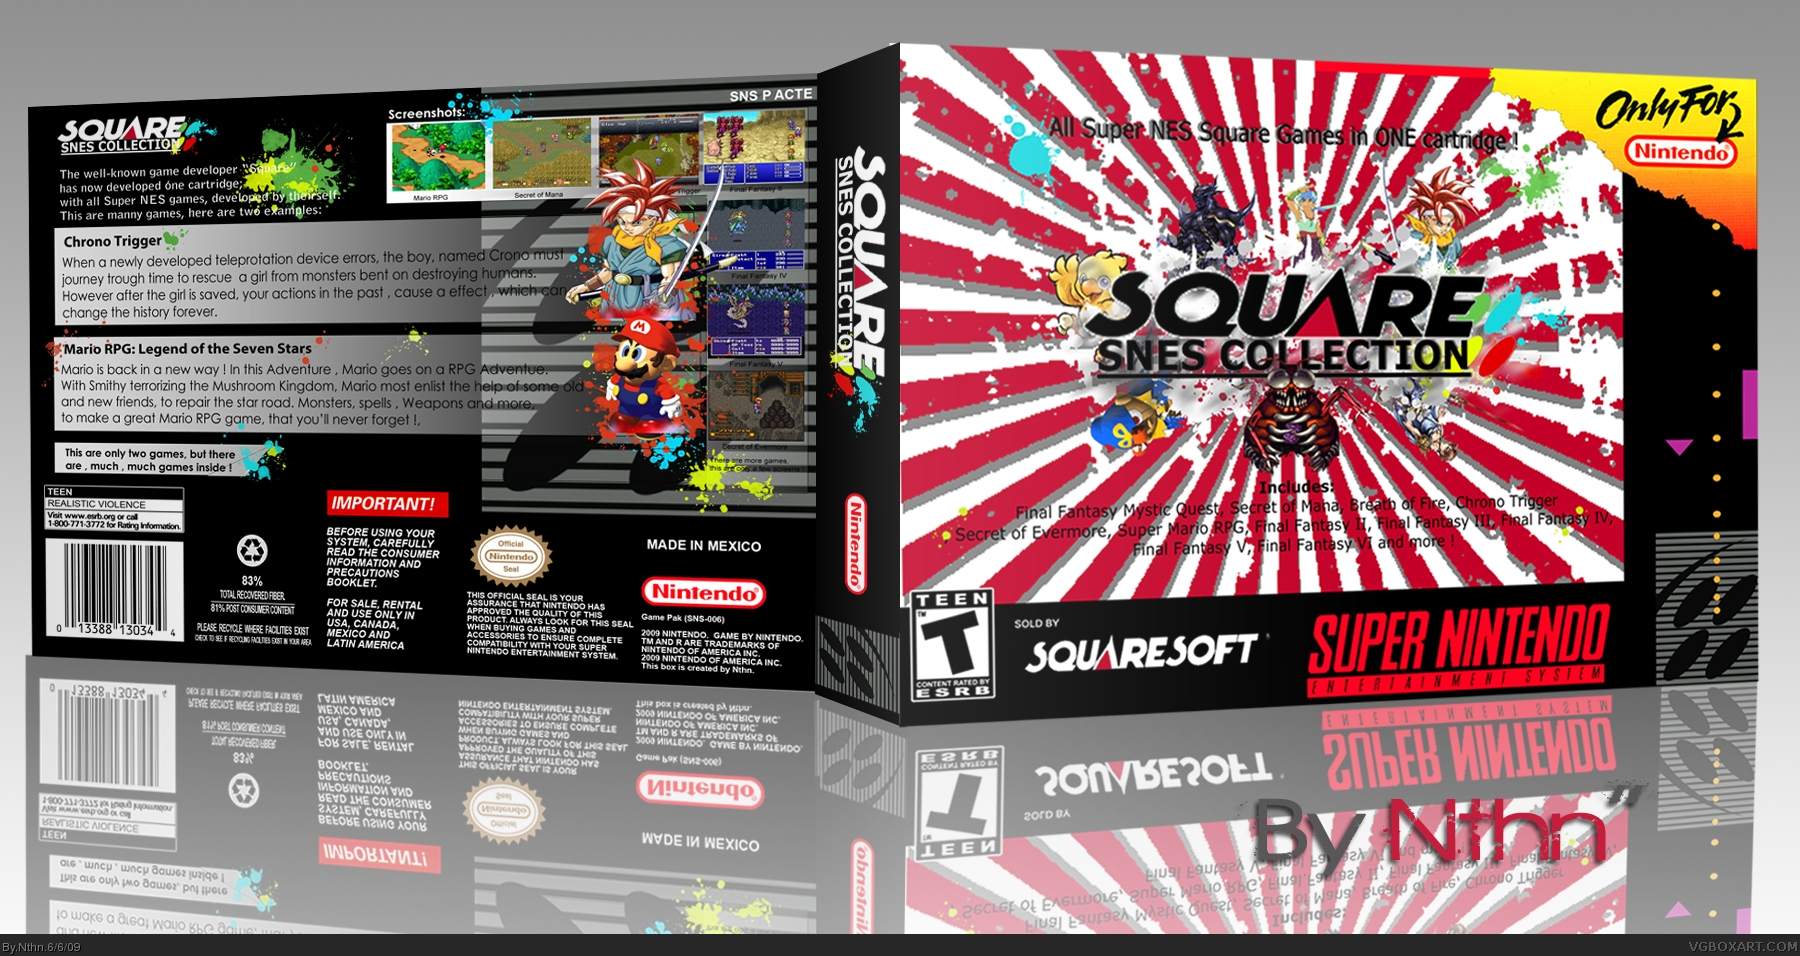 Square SNES Collection box cover